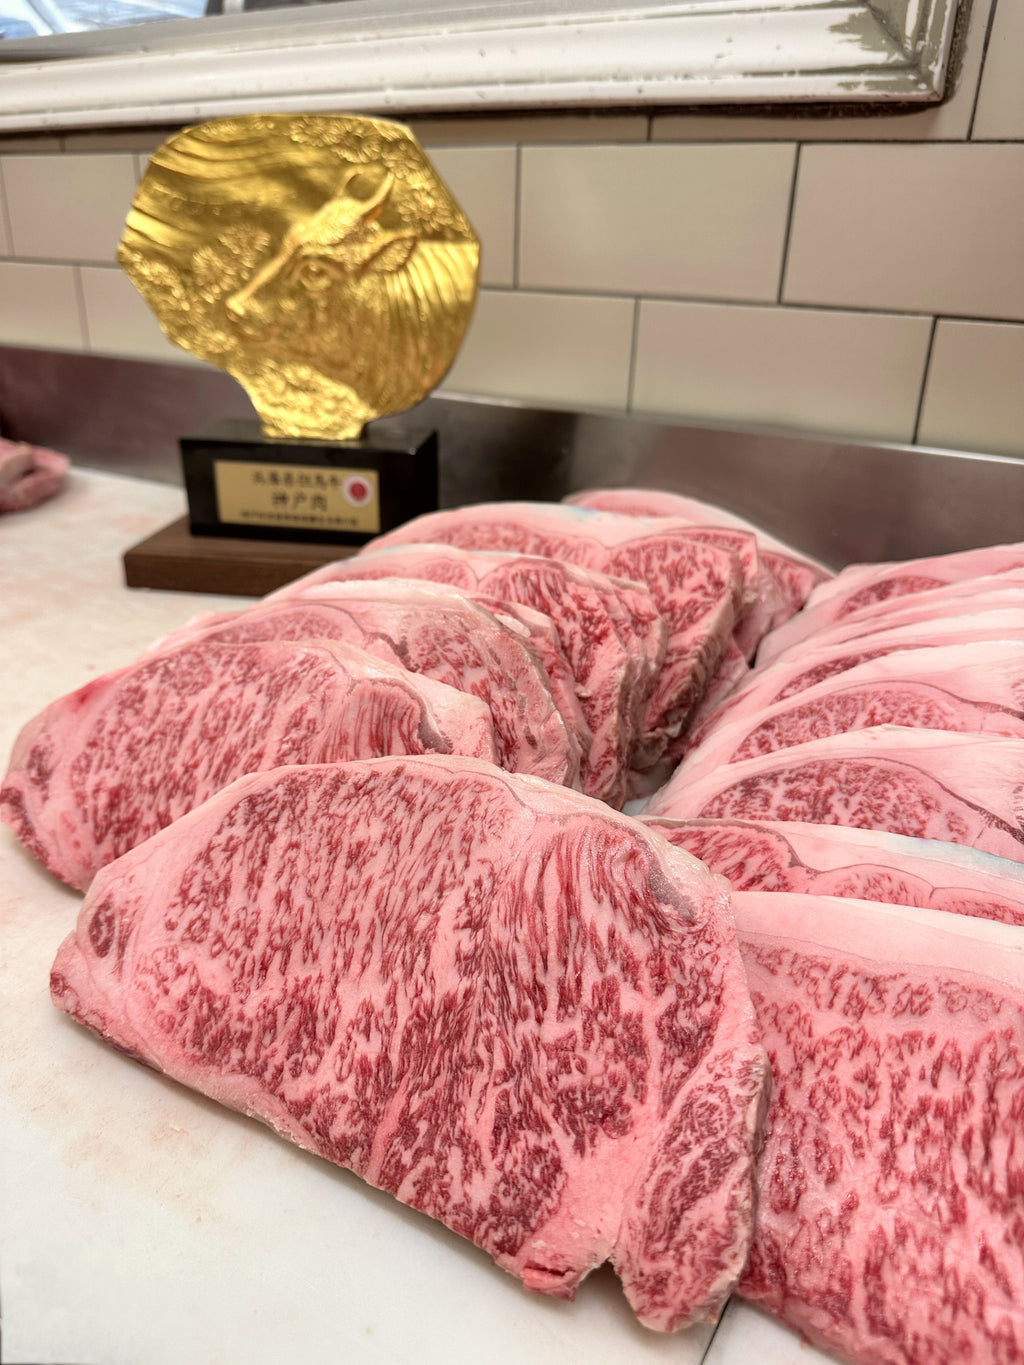 A5 BMS12 Japanese Wagyu Kobe Beef NY Strip - Alpine Butcher